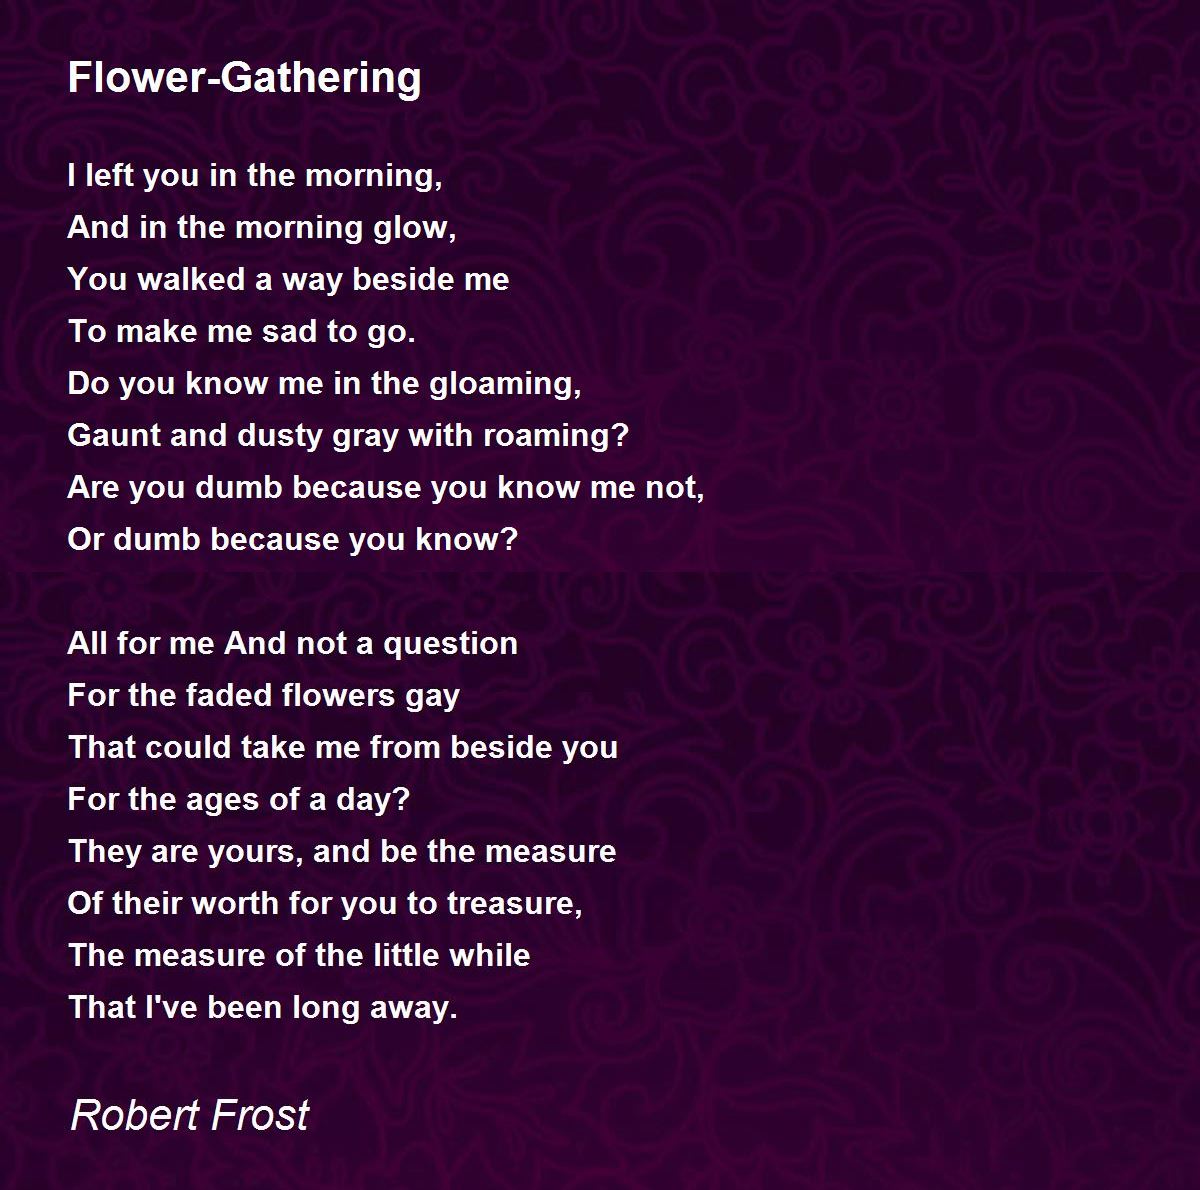 Flower-Gathering Poem by Robert Frost - Poem Hunter